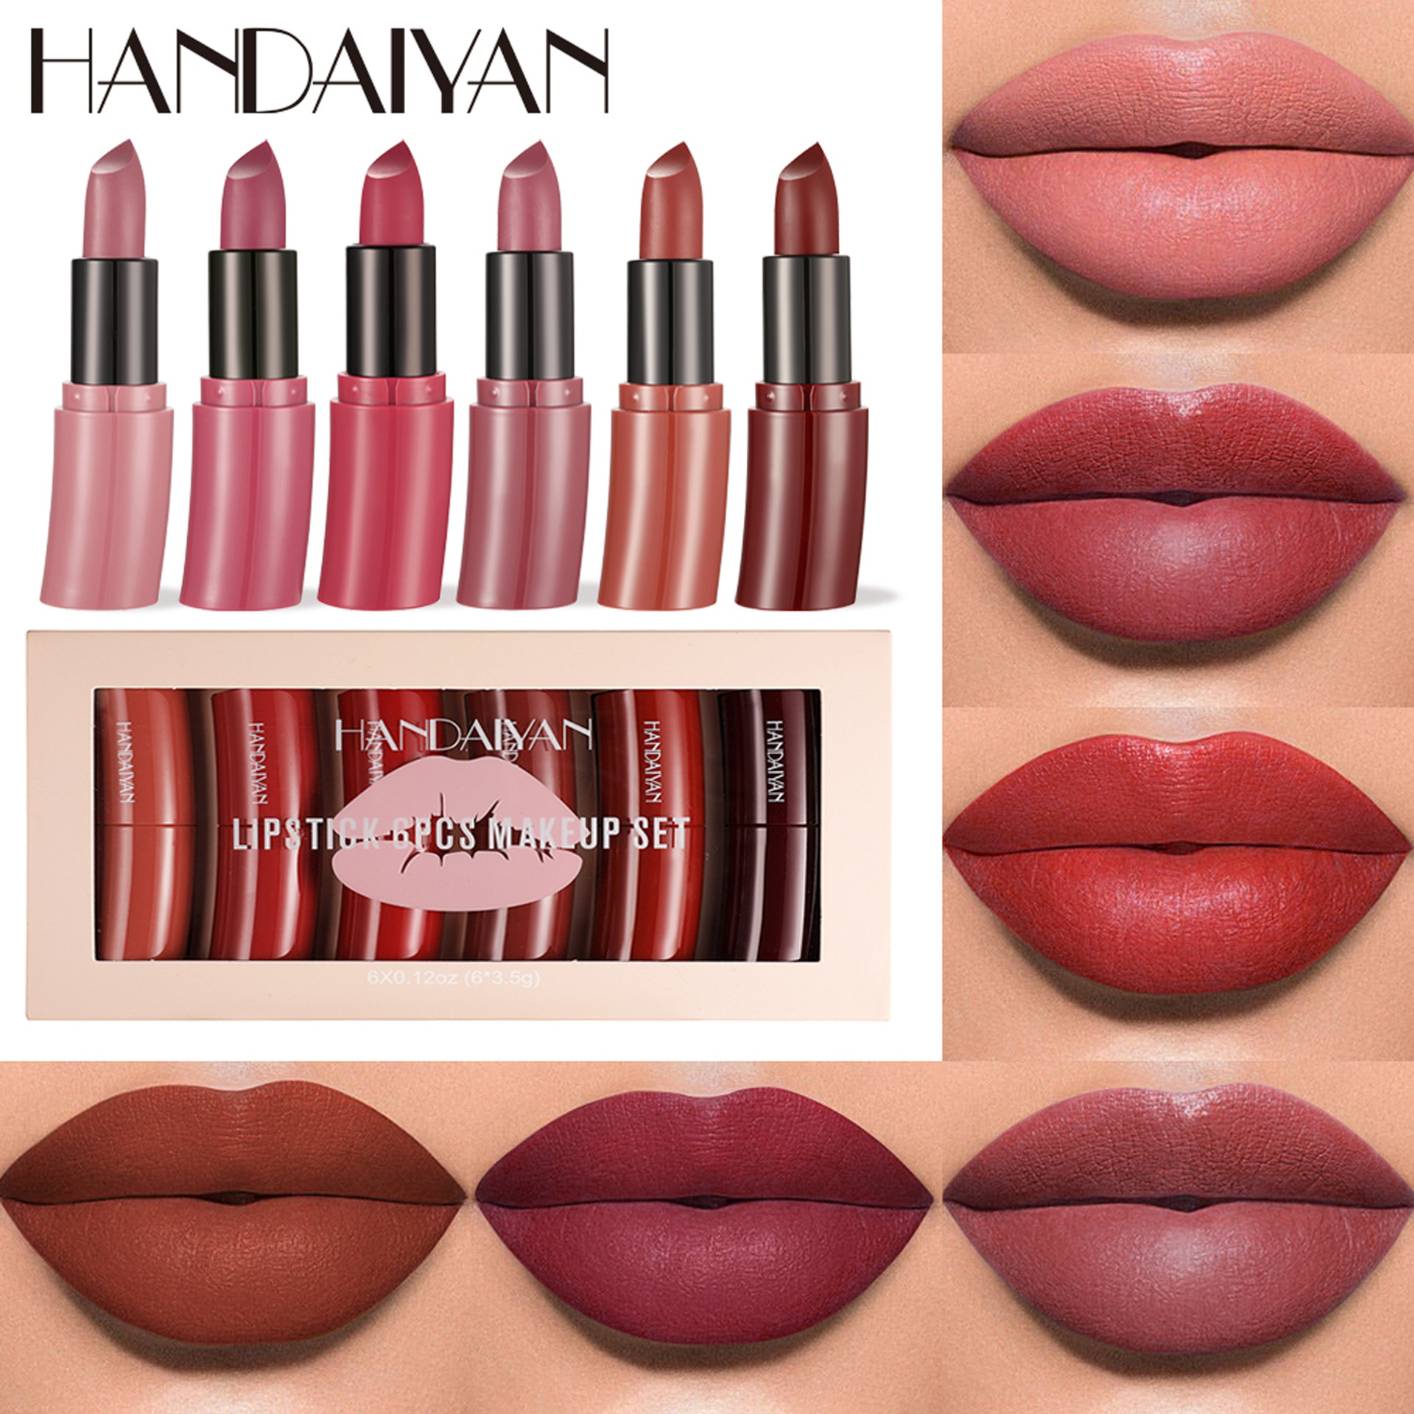 H1041 HANDAIYAN 6 Colors/Box Nude Matte Lipstick Set New Arrive Arc Waterproof Lip Stick Kit Smooth Texture Makeup Cosmetics Lip Balm